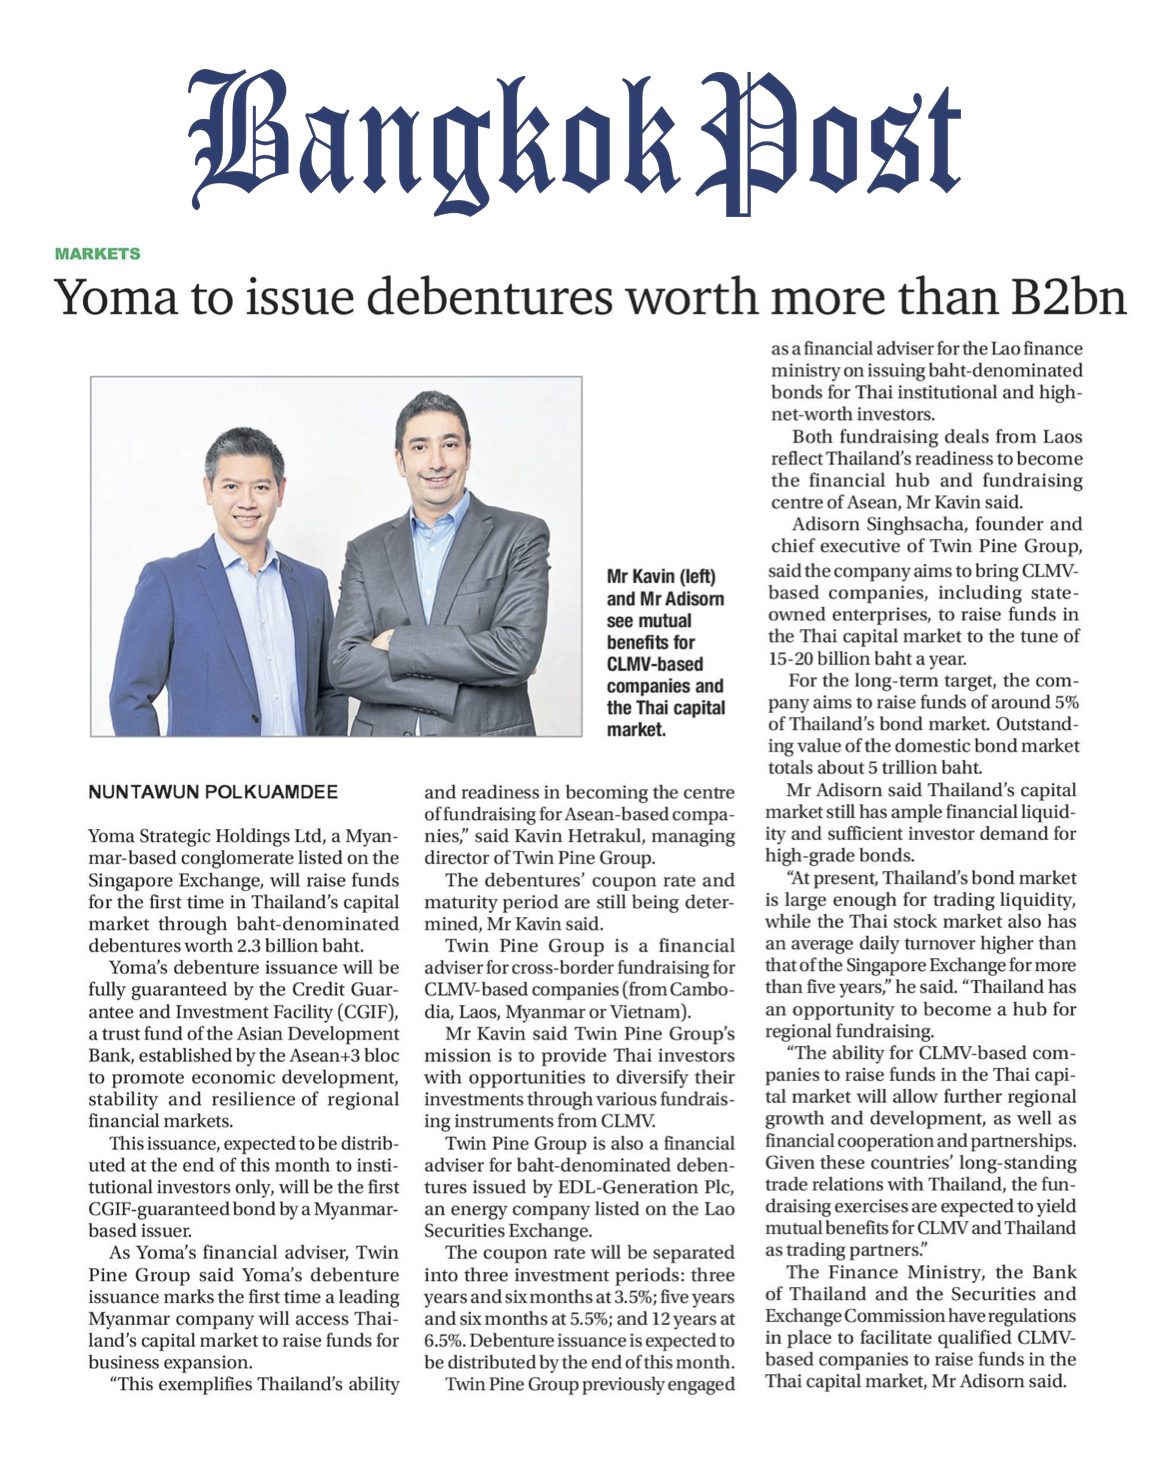 Bangkok Post Newspaper, Business – Yoma to issue debentures worth more than B2bn